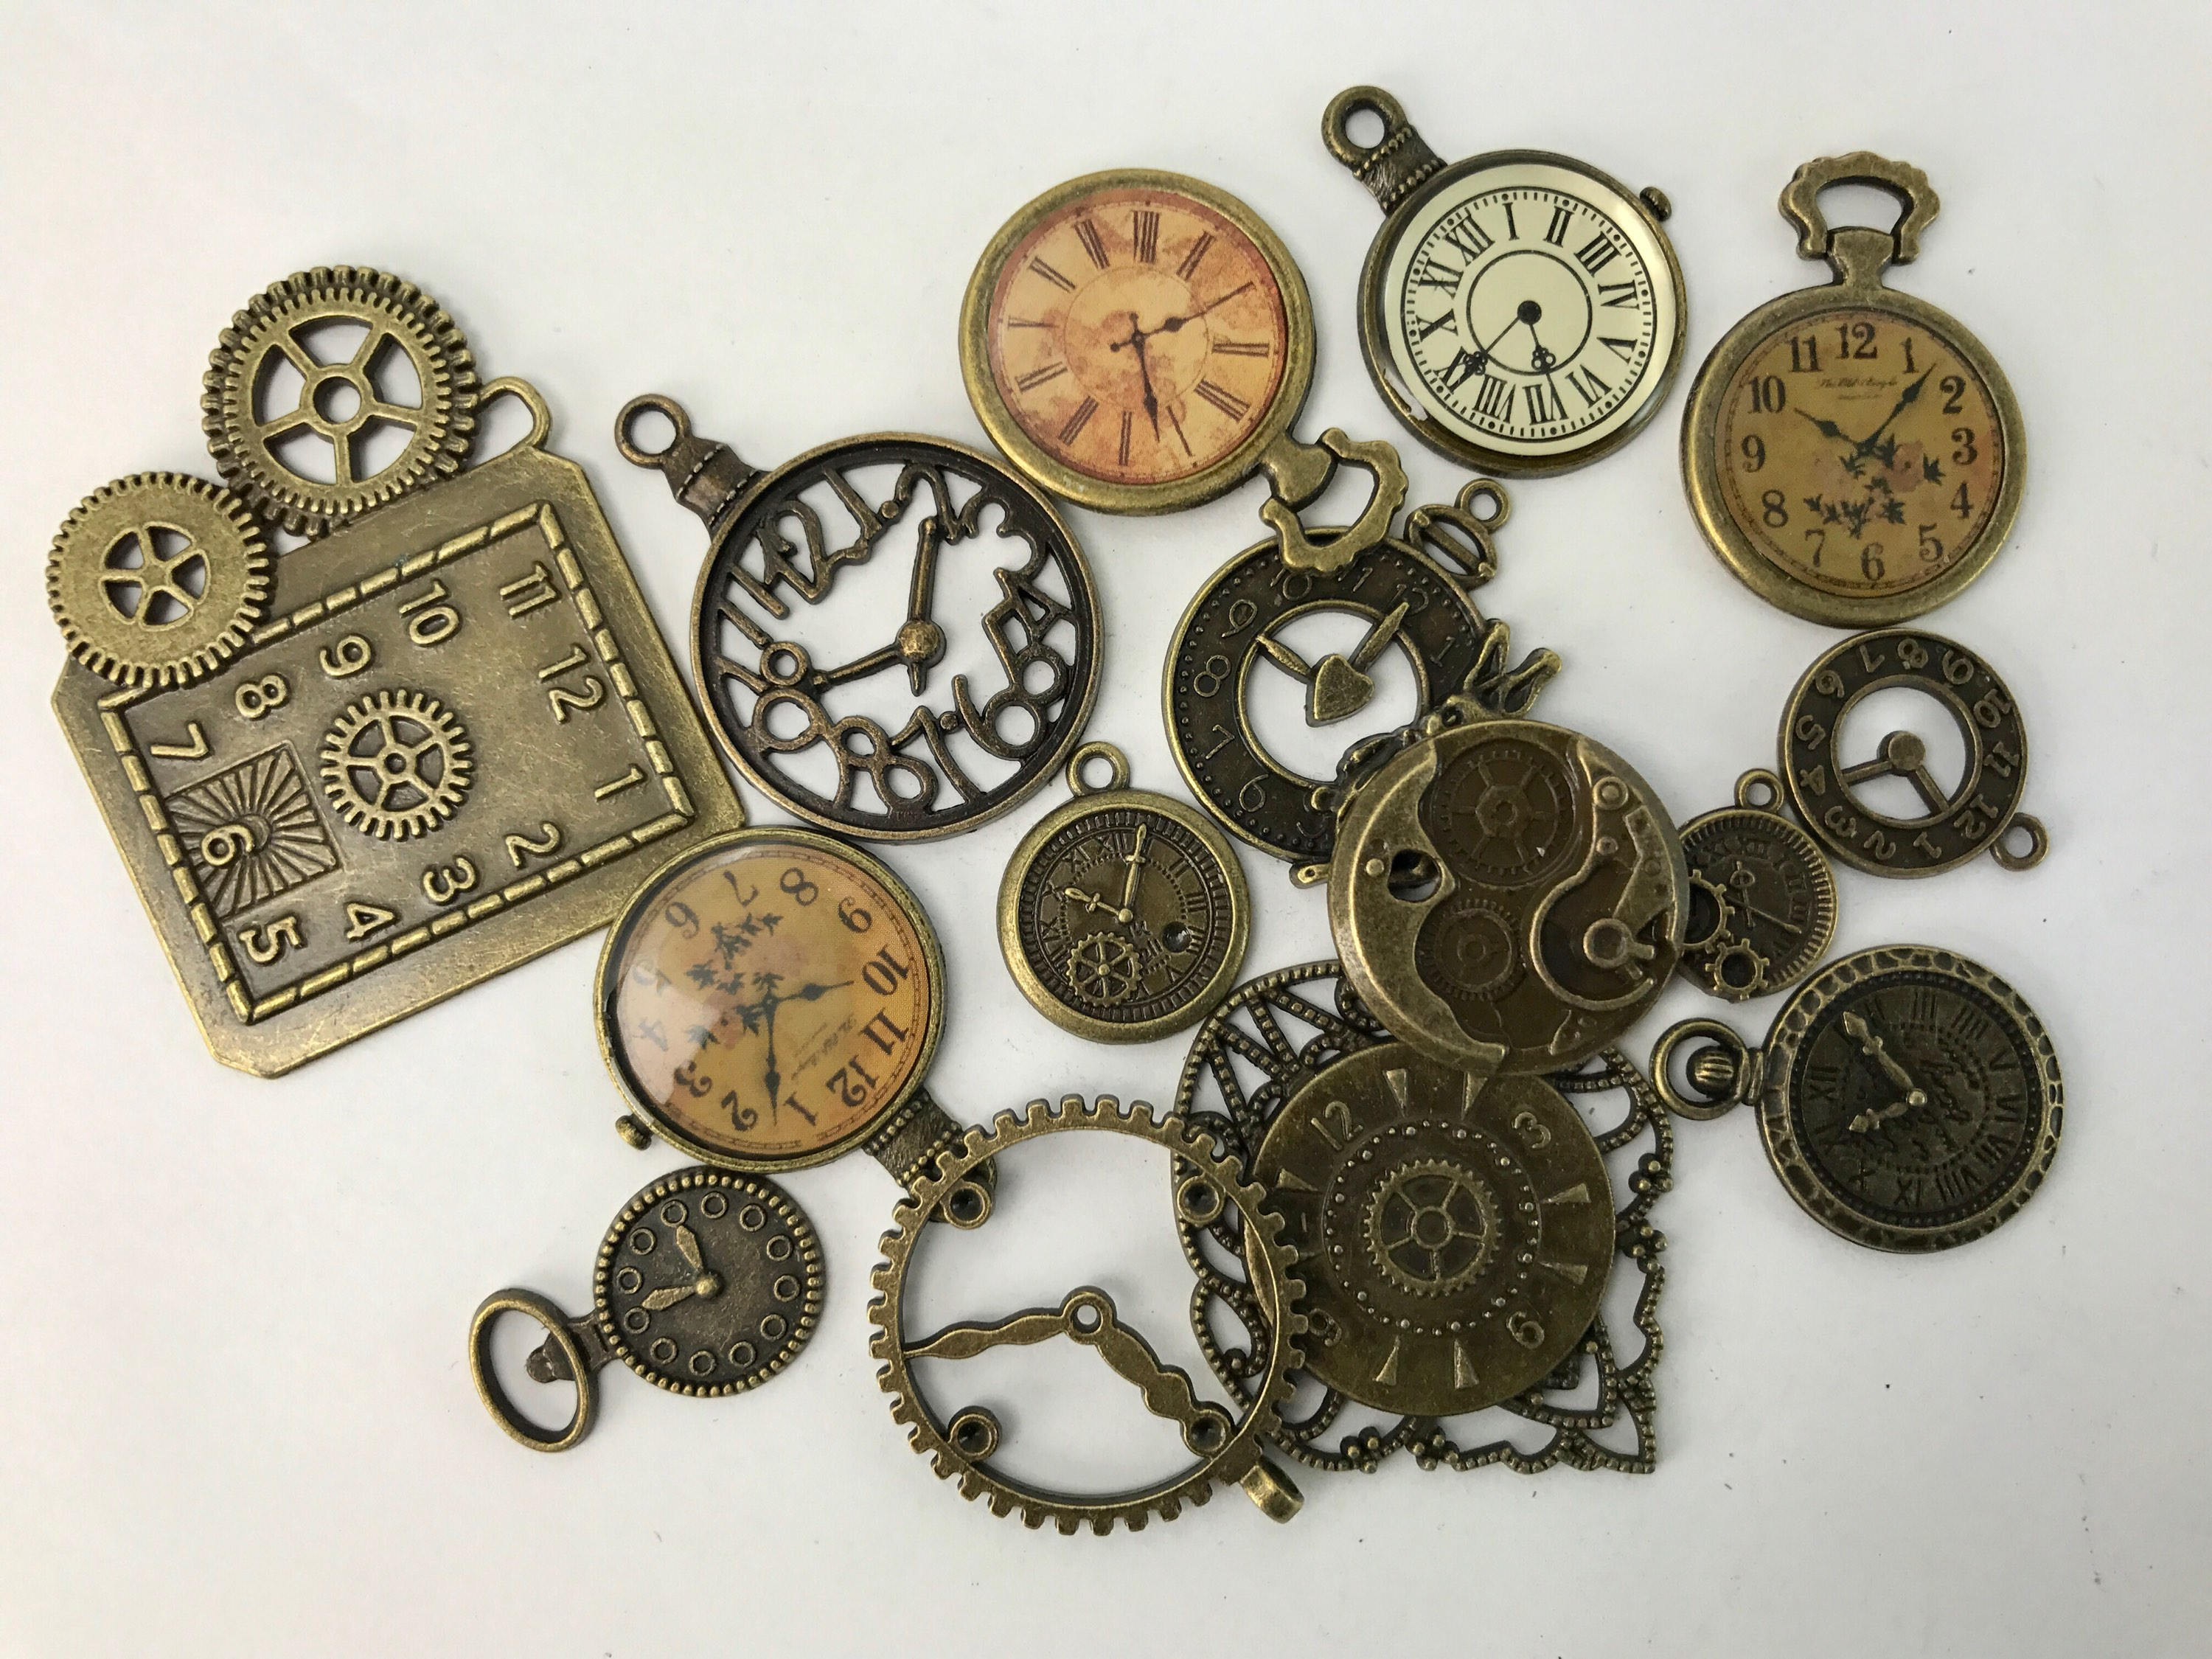 15 Pcs Mixed Charms - Random Clocks in Antique Bronze